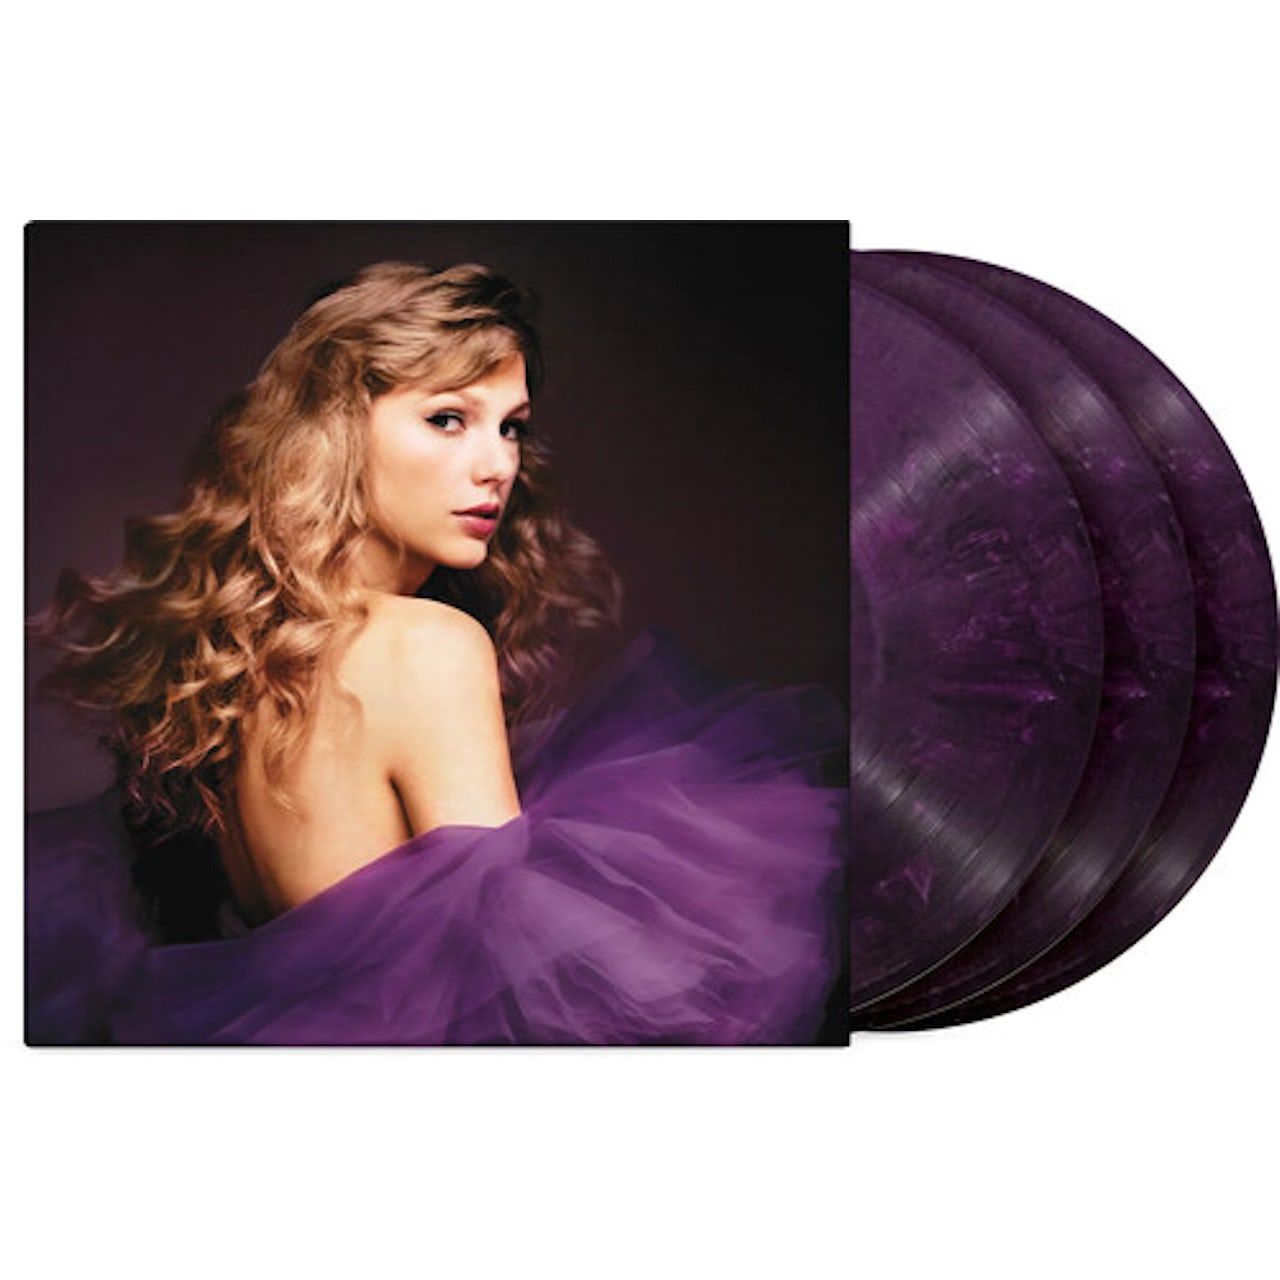 0602448438065, Виниловая пластинка Swift, Taylor, Speak Now (Taylor's Version) (coloured) виниловая пластинка taylor swift speak now taylor s version 3lp фиолетовый винил